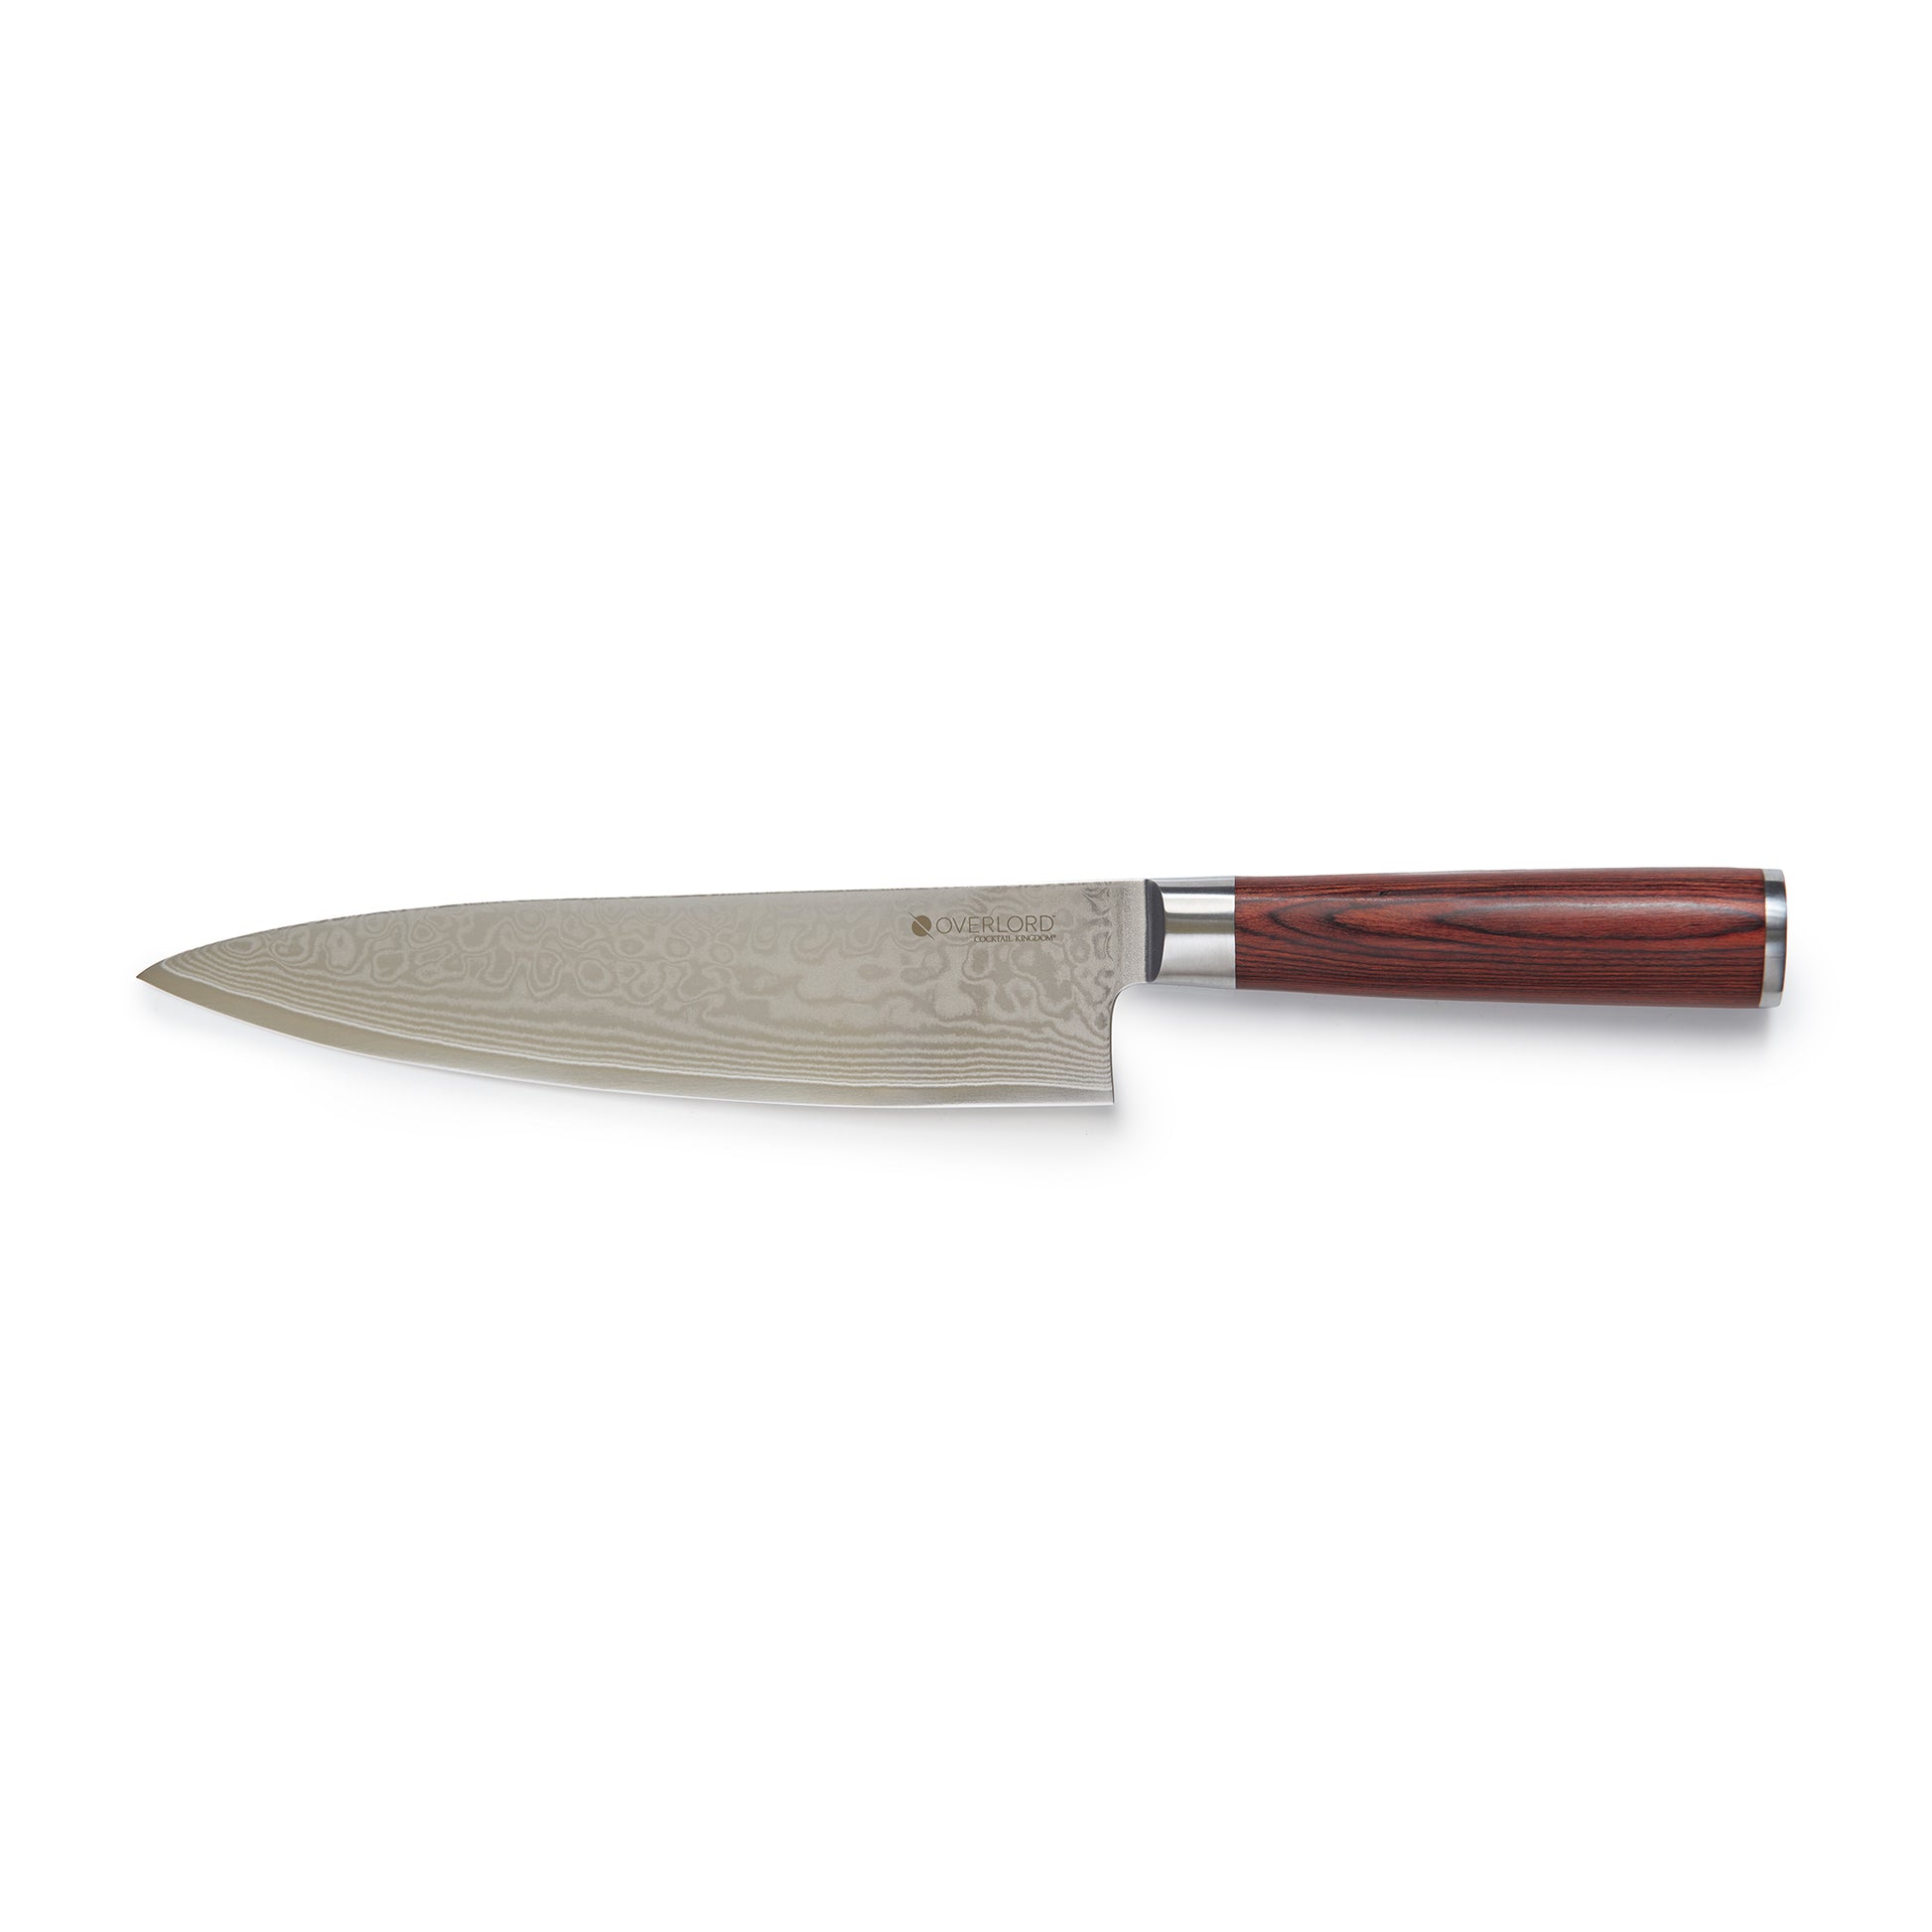 OVERLORD™ 8” CHEF'S KNIFE – PAKKAWOOD HANDLE